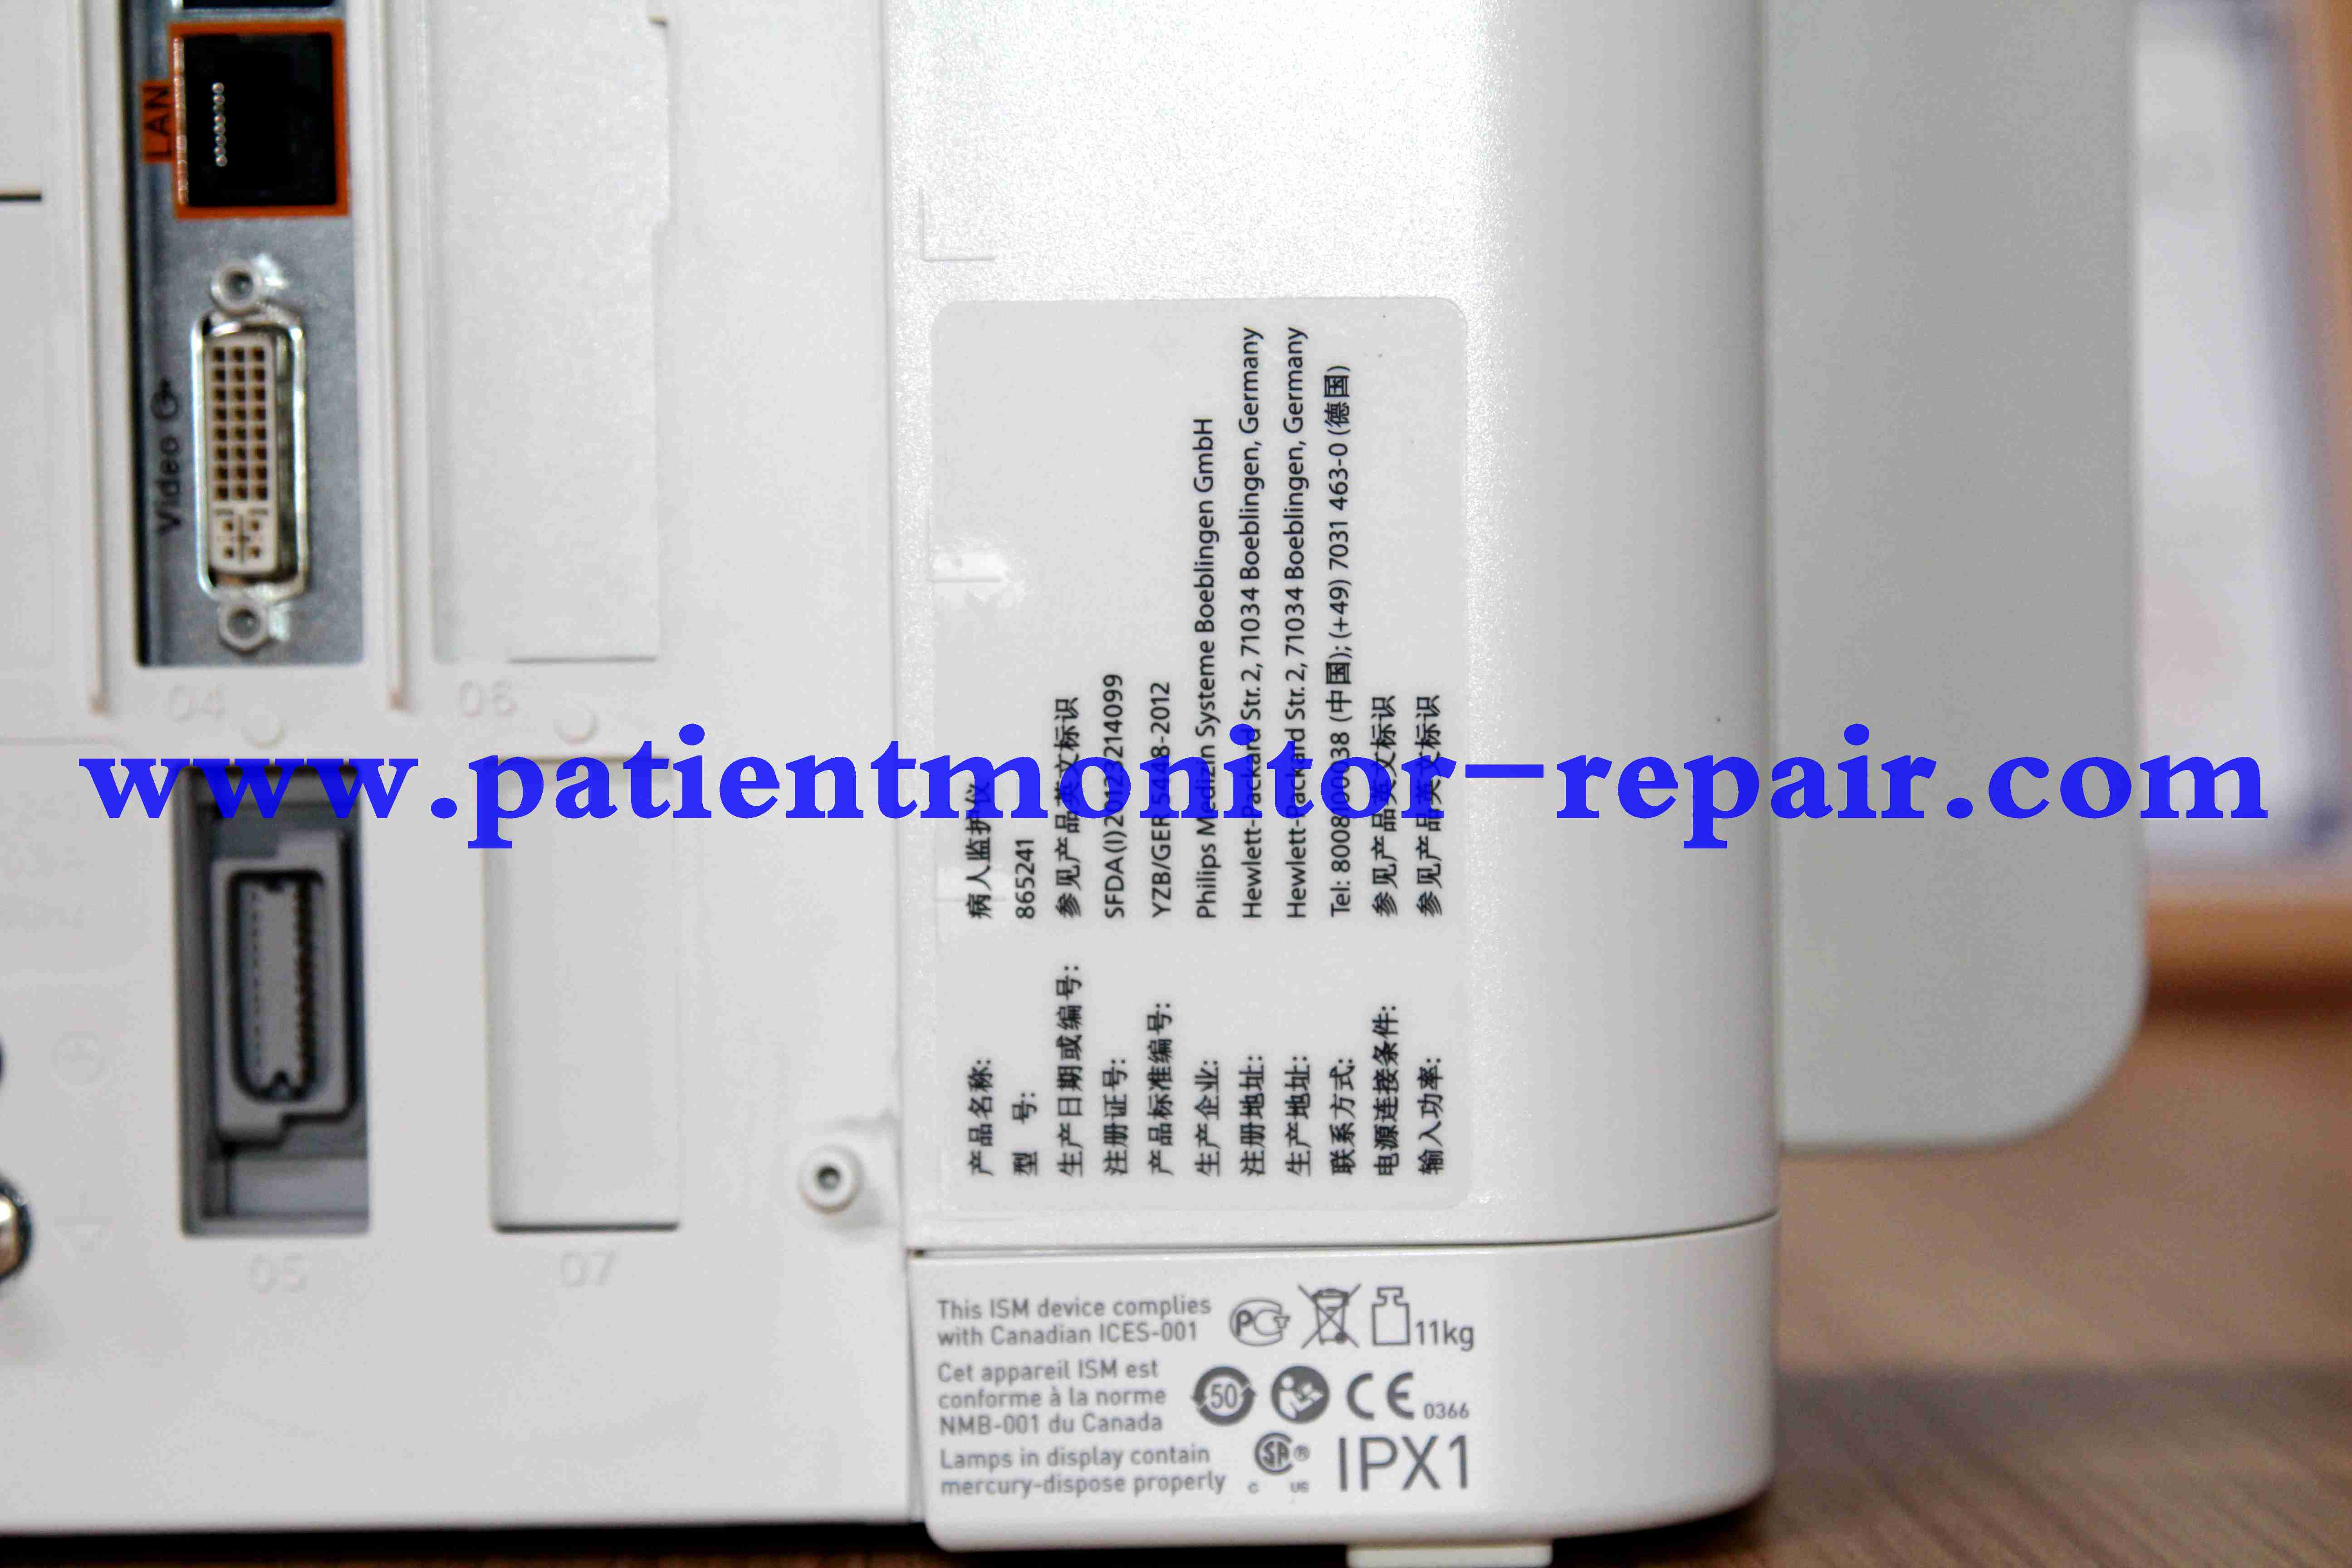  Type IntelliVue MX700 patient monitor PN:865241